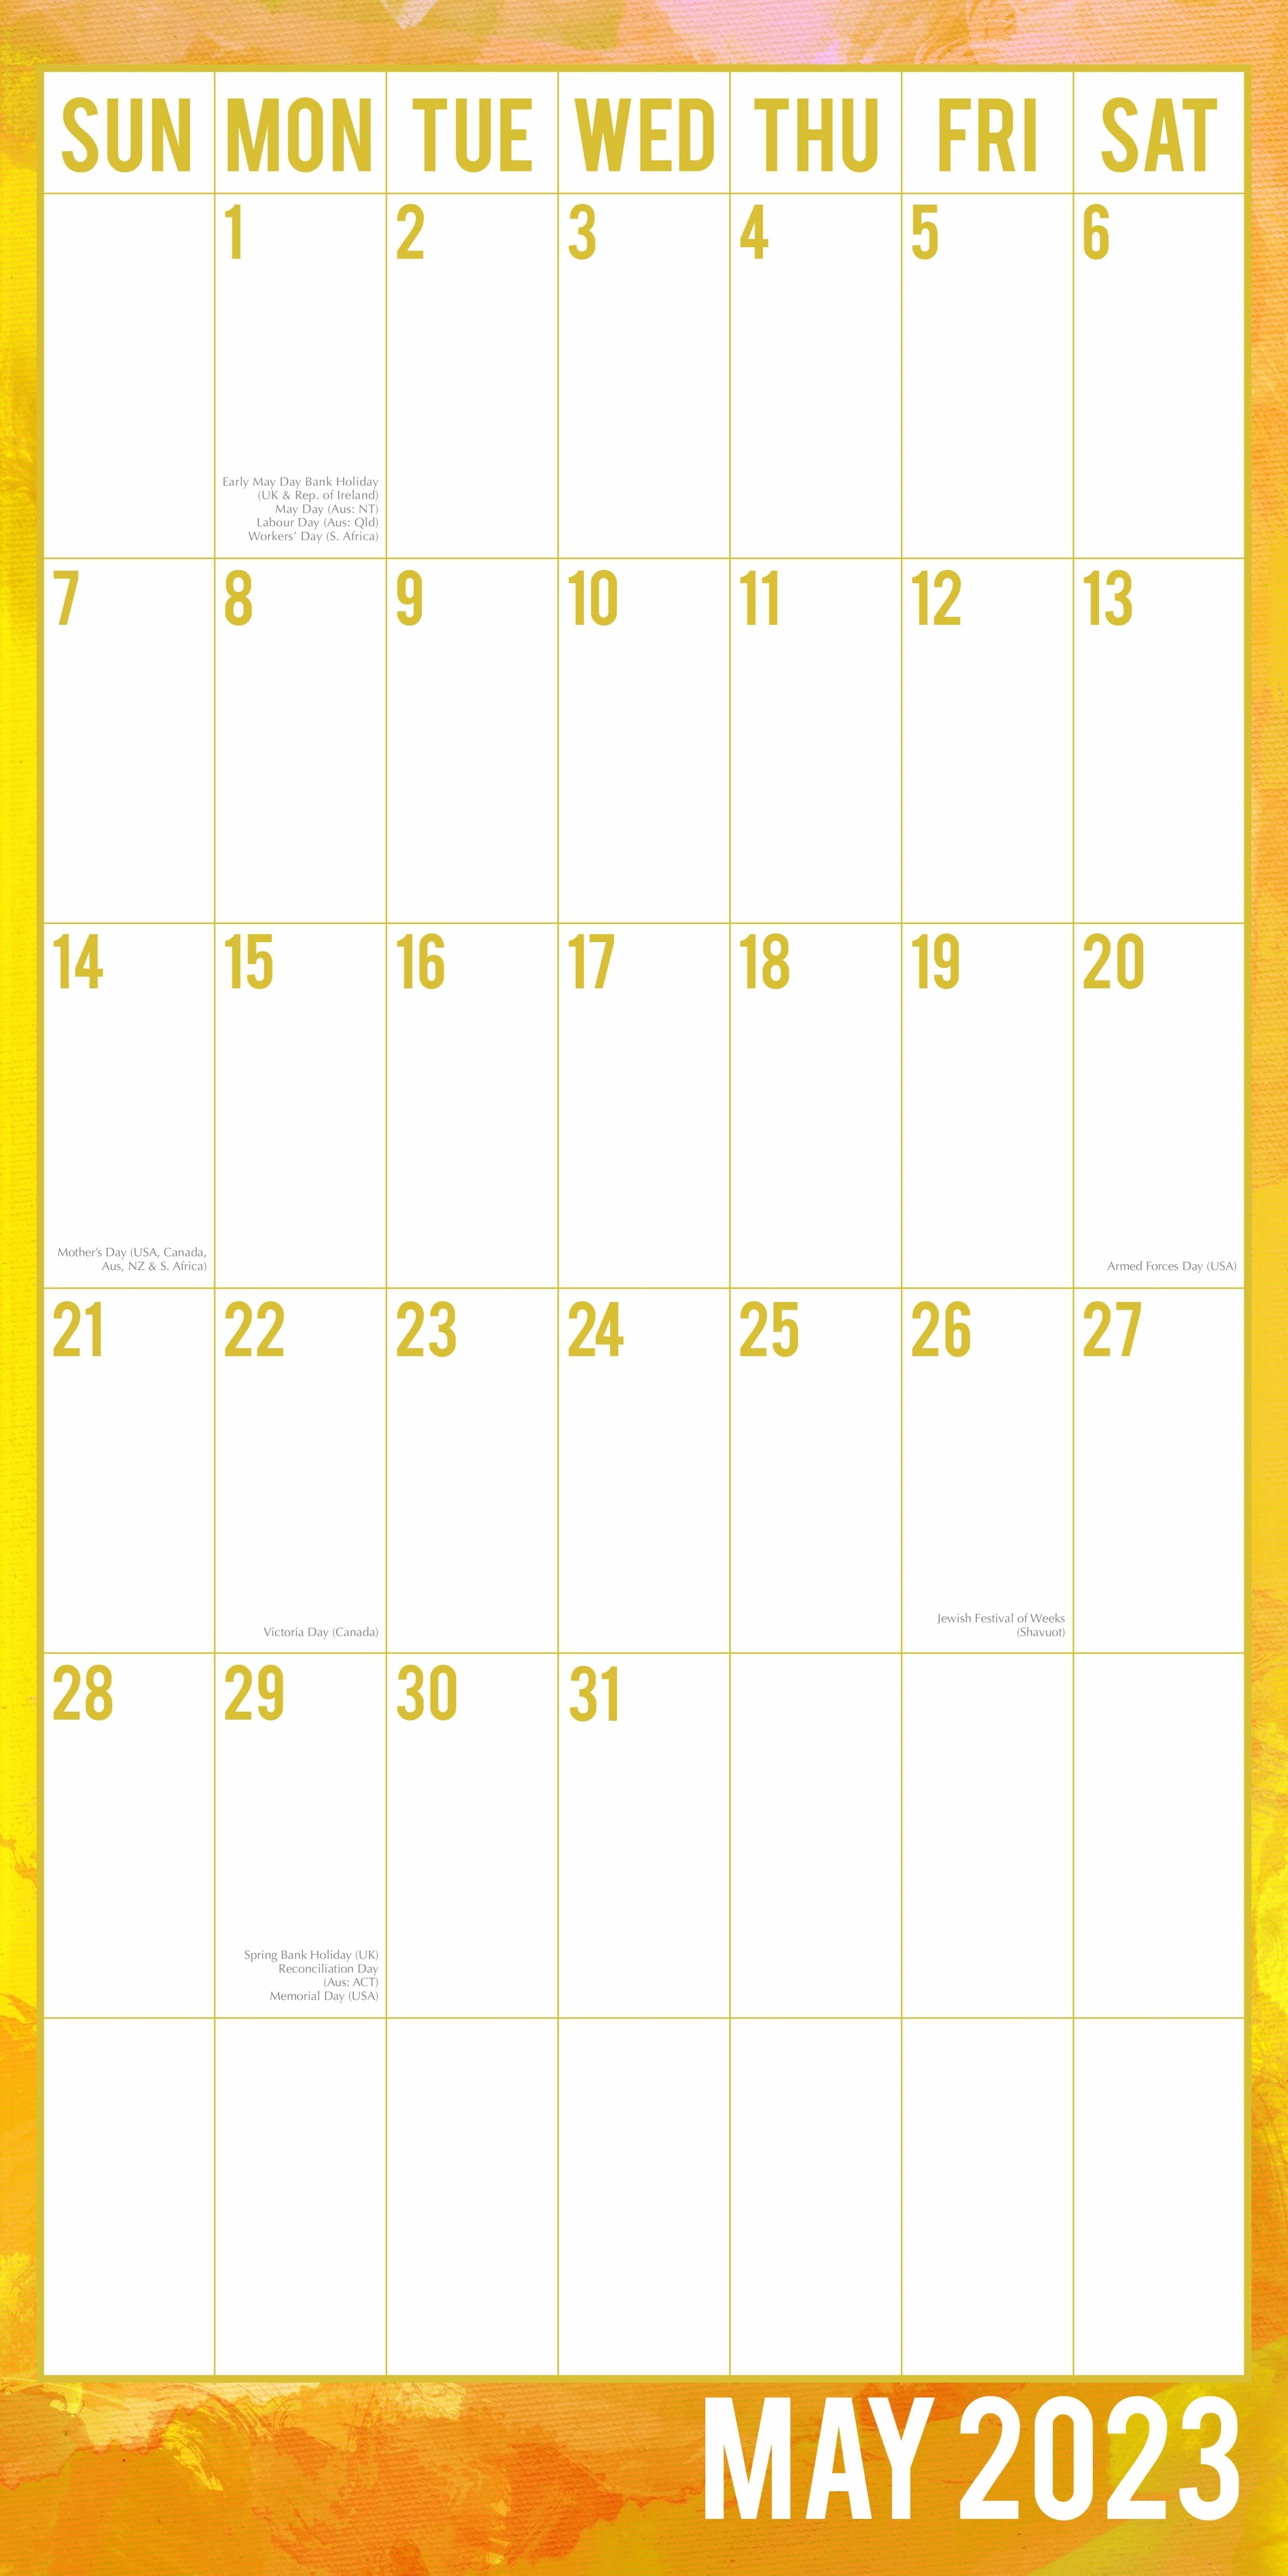 2023 Large Print Calendar - Square Wall Calendar